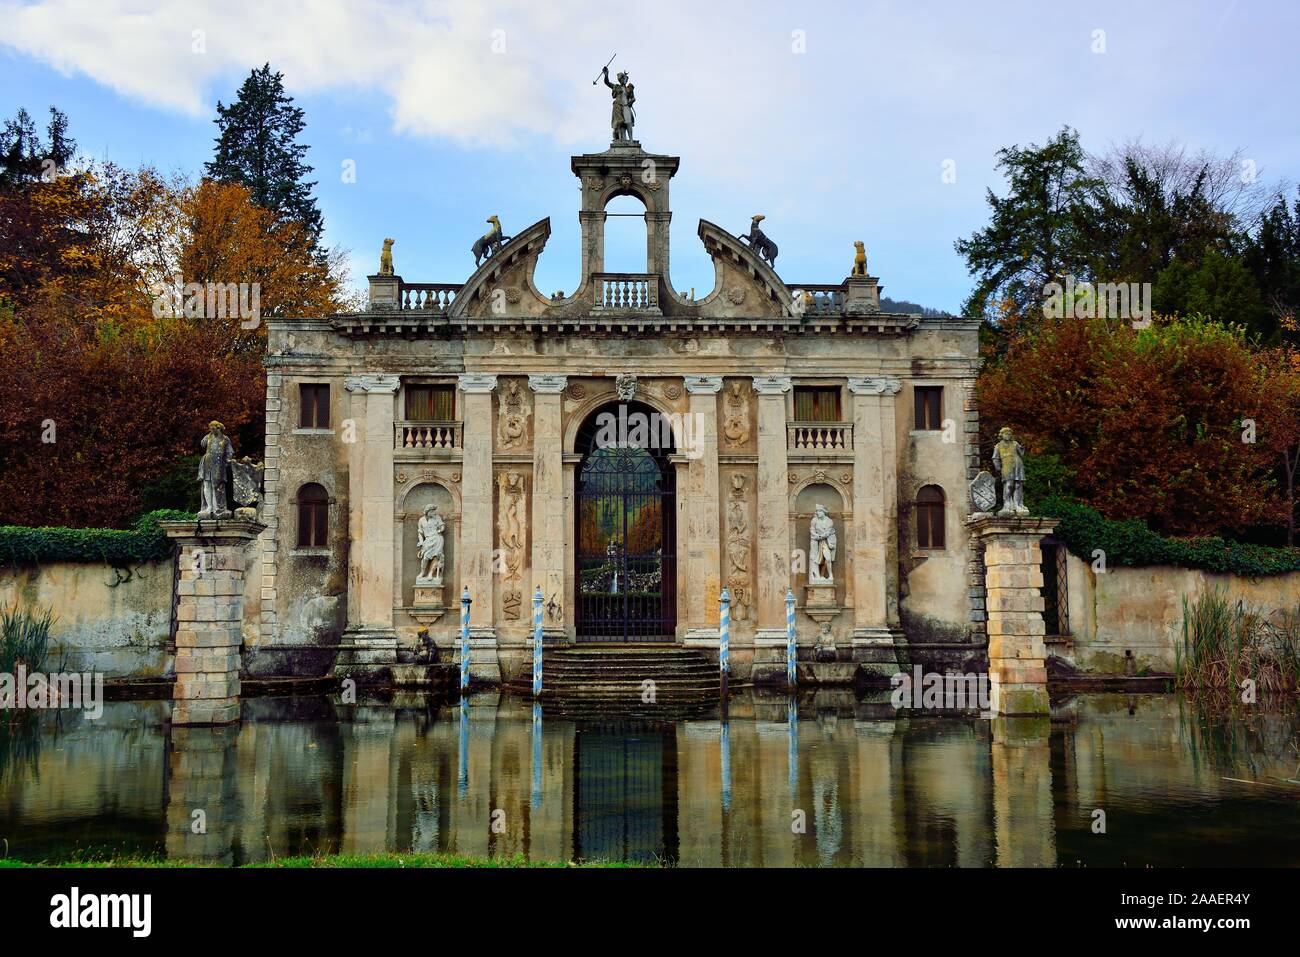 Valsanzibio, Veneto. Villa Barbarigo : Diana’s Pavilion or Diana’s Doorway was the main entrance accessible via water. Stock Photo